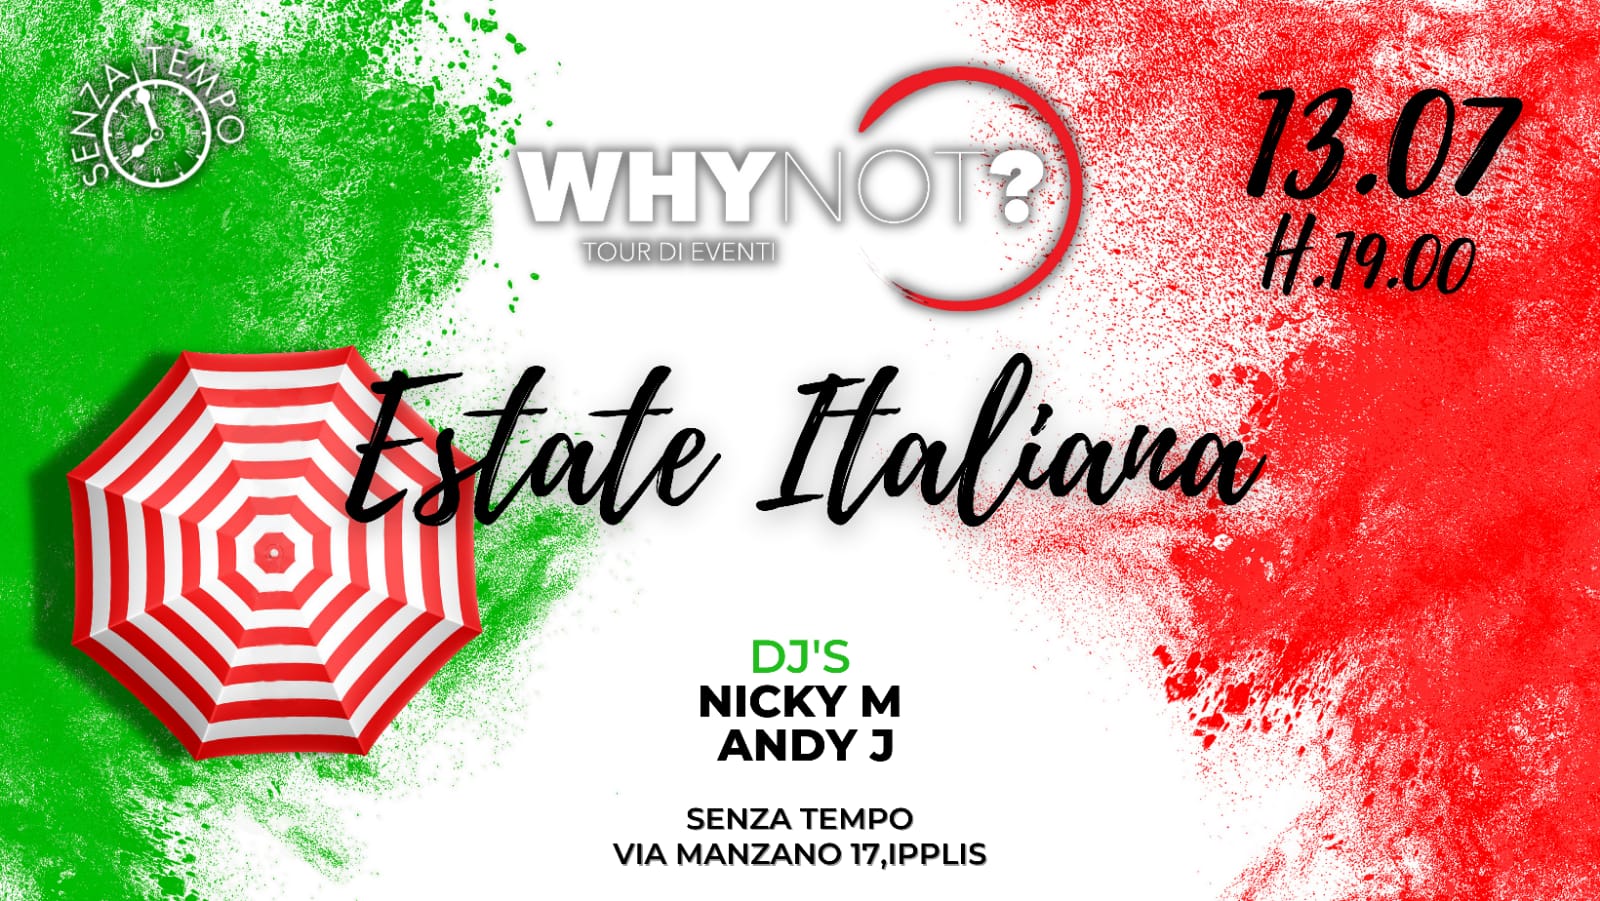 Why Not_Estate Italiana - EventiFVG.it